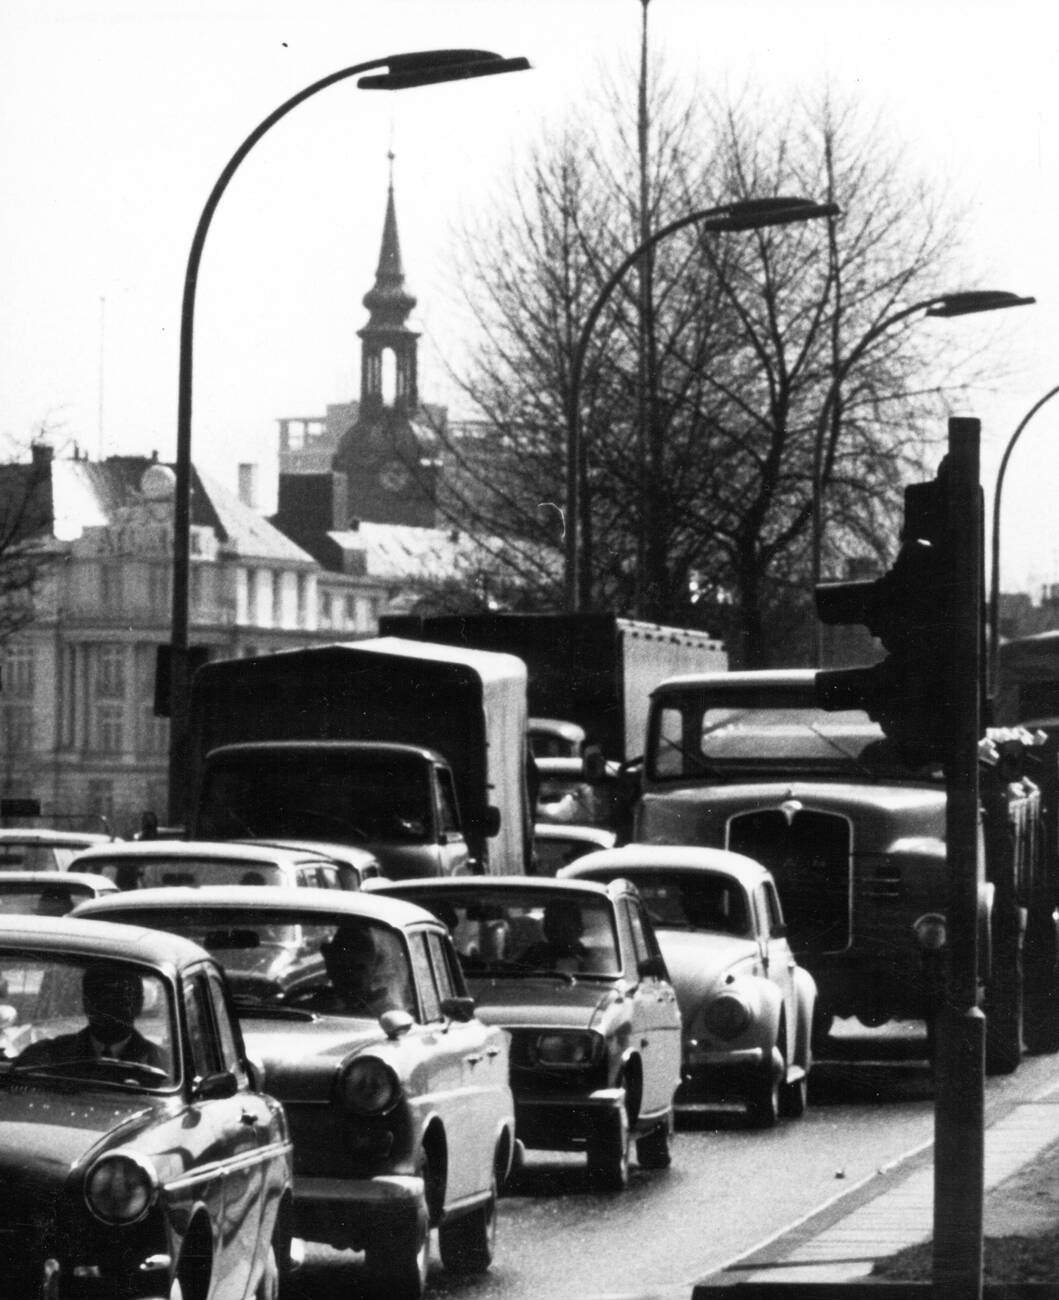 A traffic jam in Hamburg, Germany on An der Alster street in 1970.